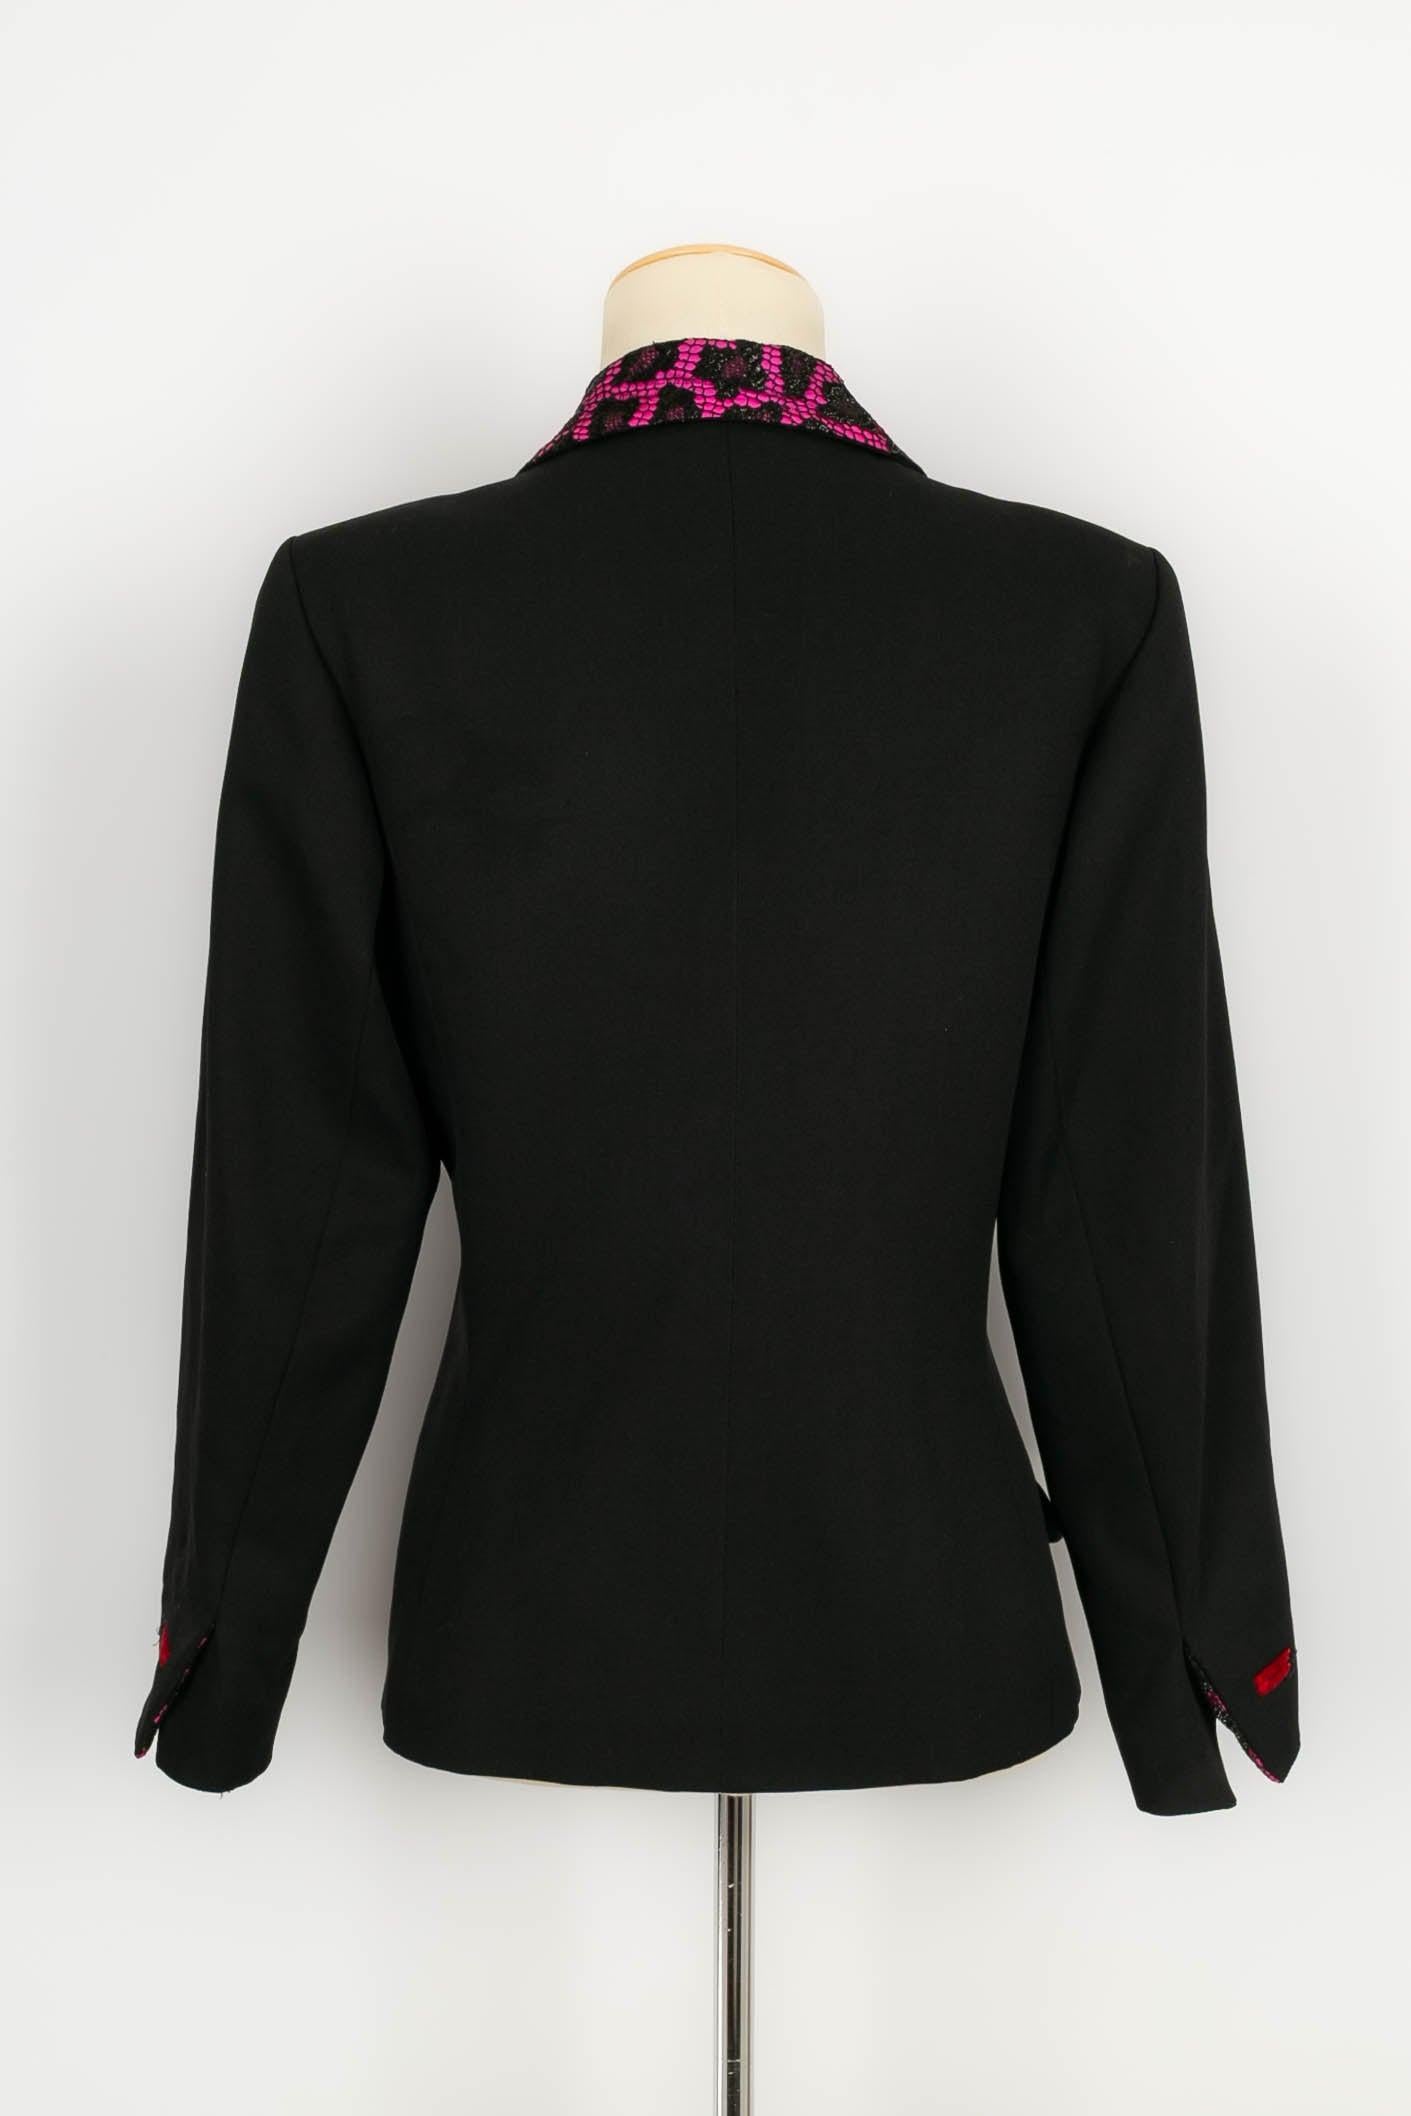 Yves Saint Laurent Winter  Black Wool and Lace Jacket, 1990 In Excellent Condition For Sale In SAINT-OUEN-SUR-SEINE, FR